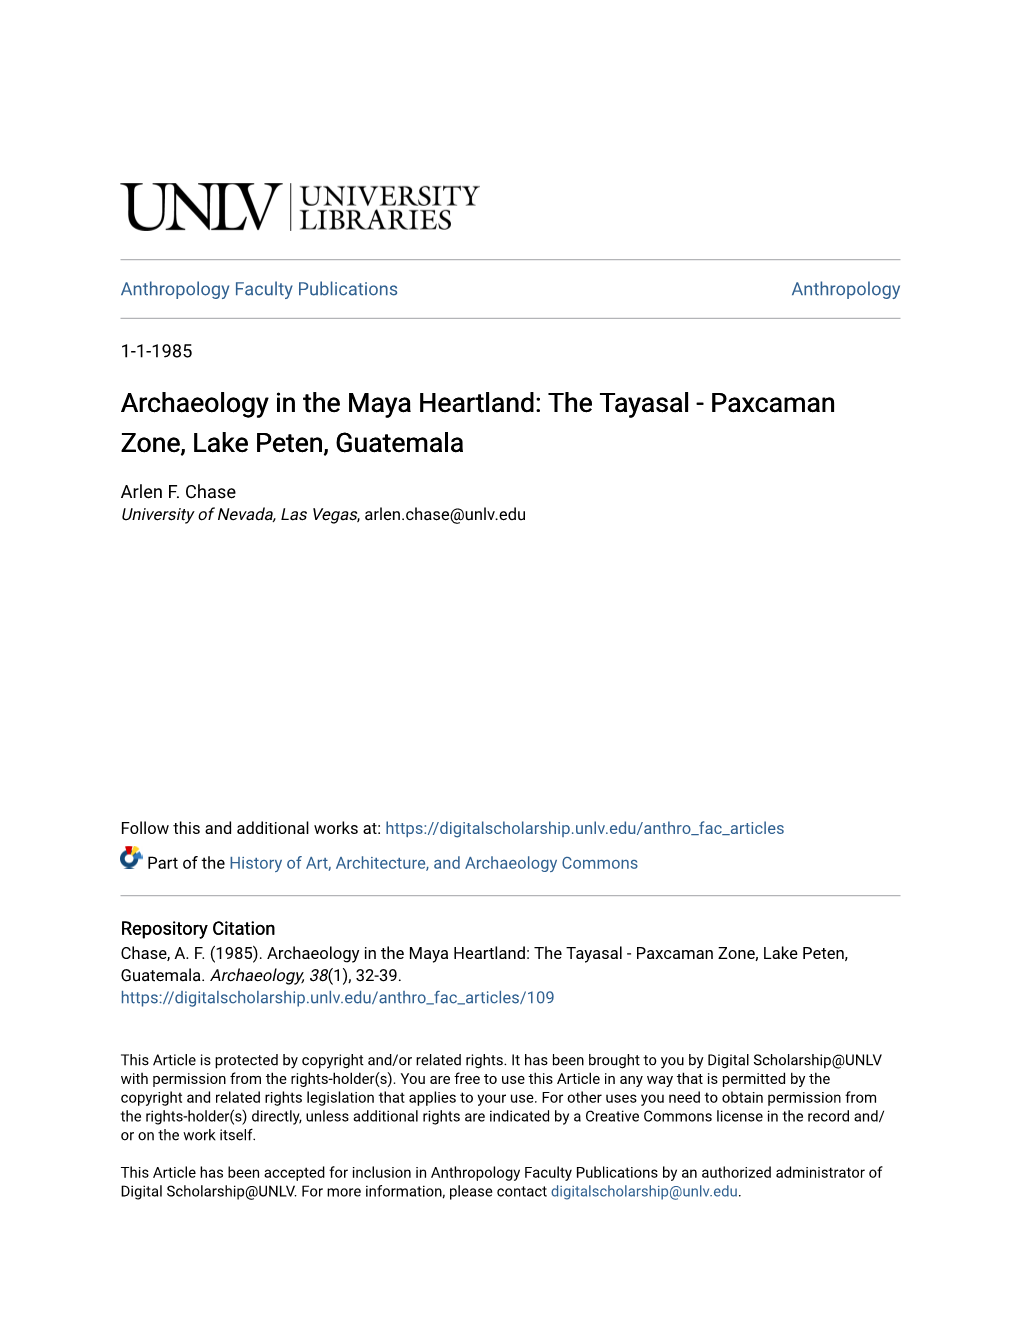 Archaeology in the Maya Heartland: the Tayasal - Paxcaman Zone, Lake Peten, Guatemala